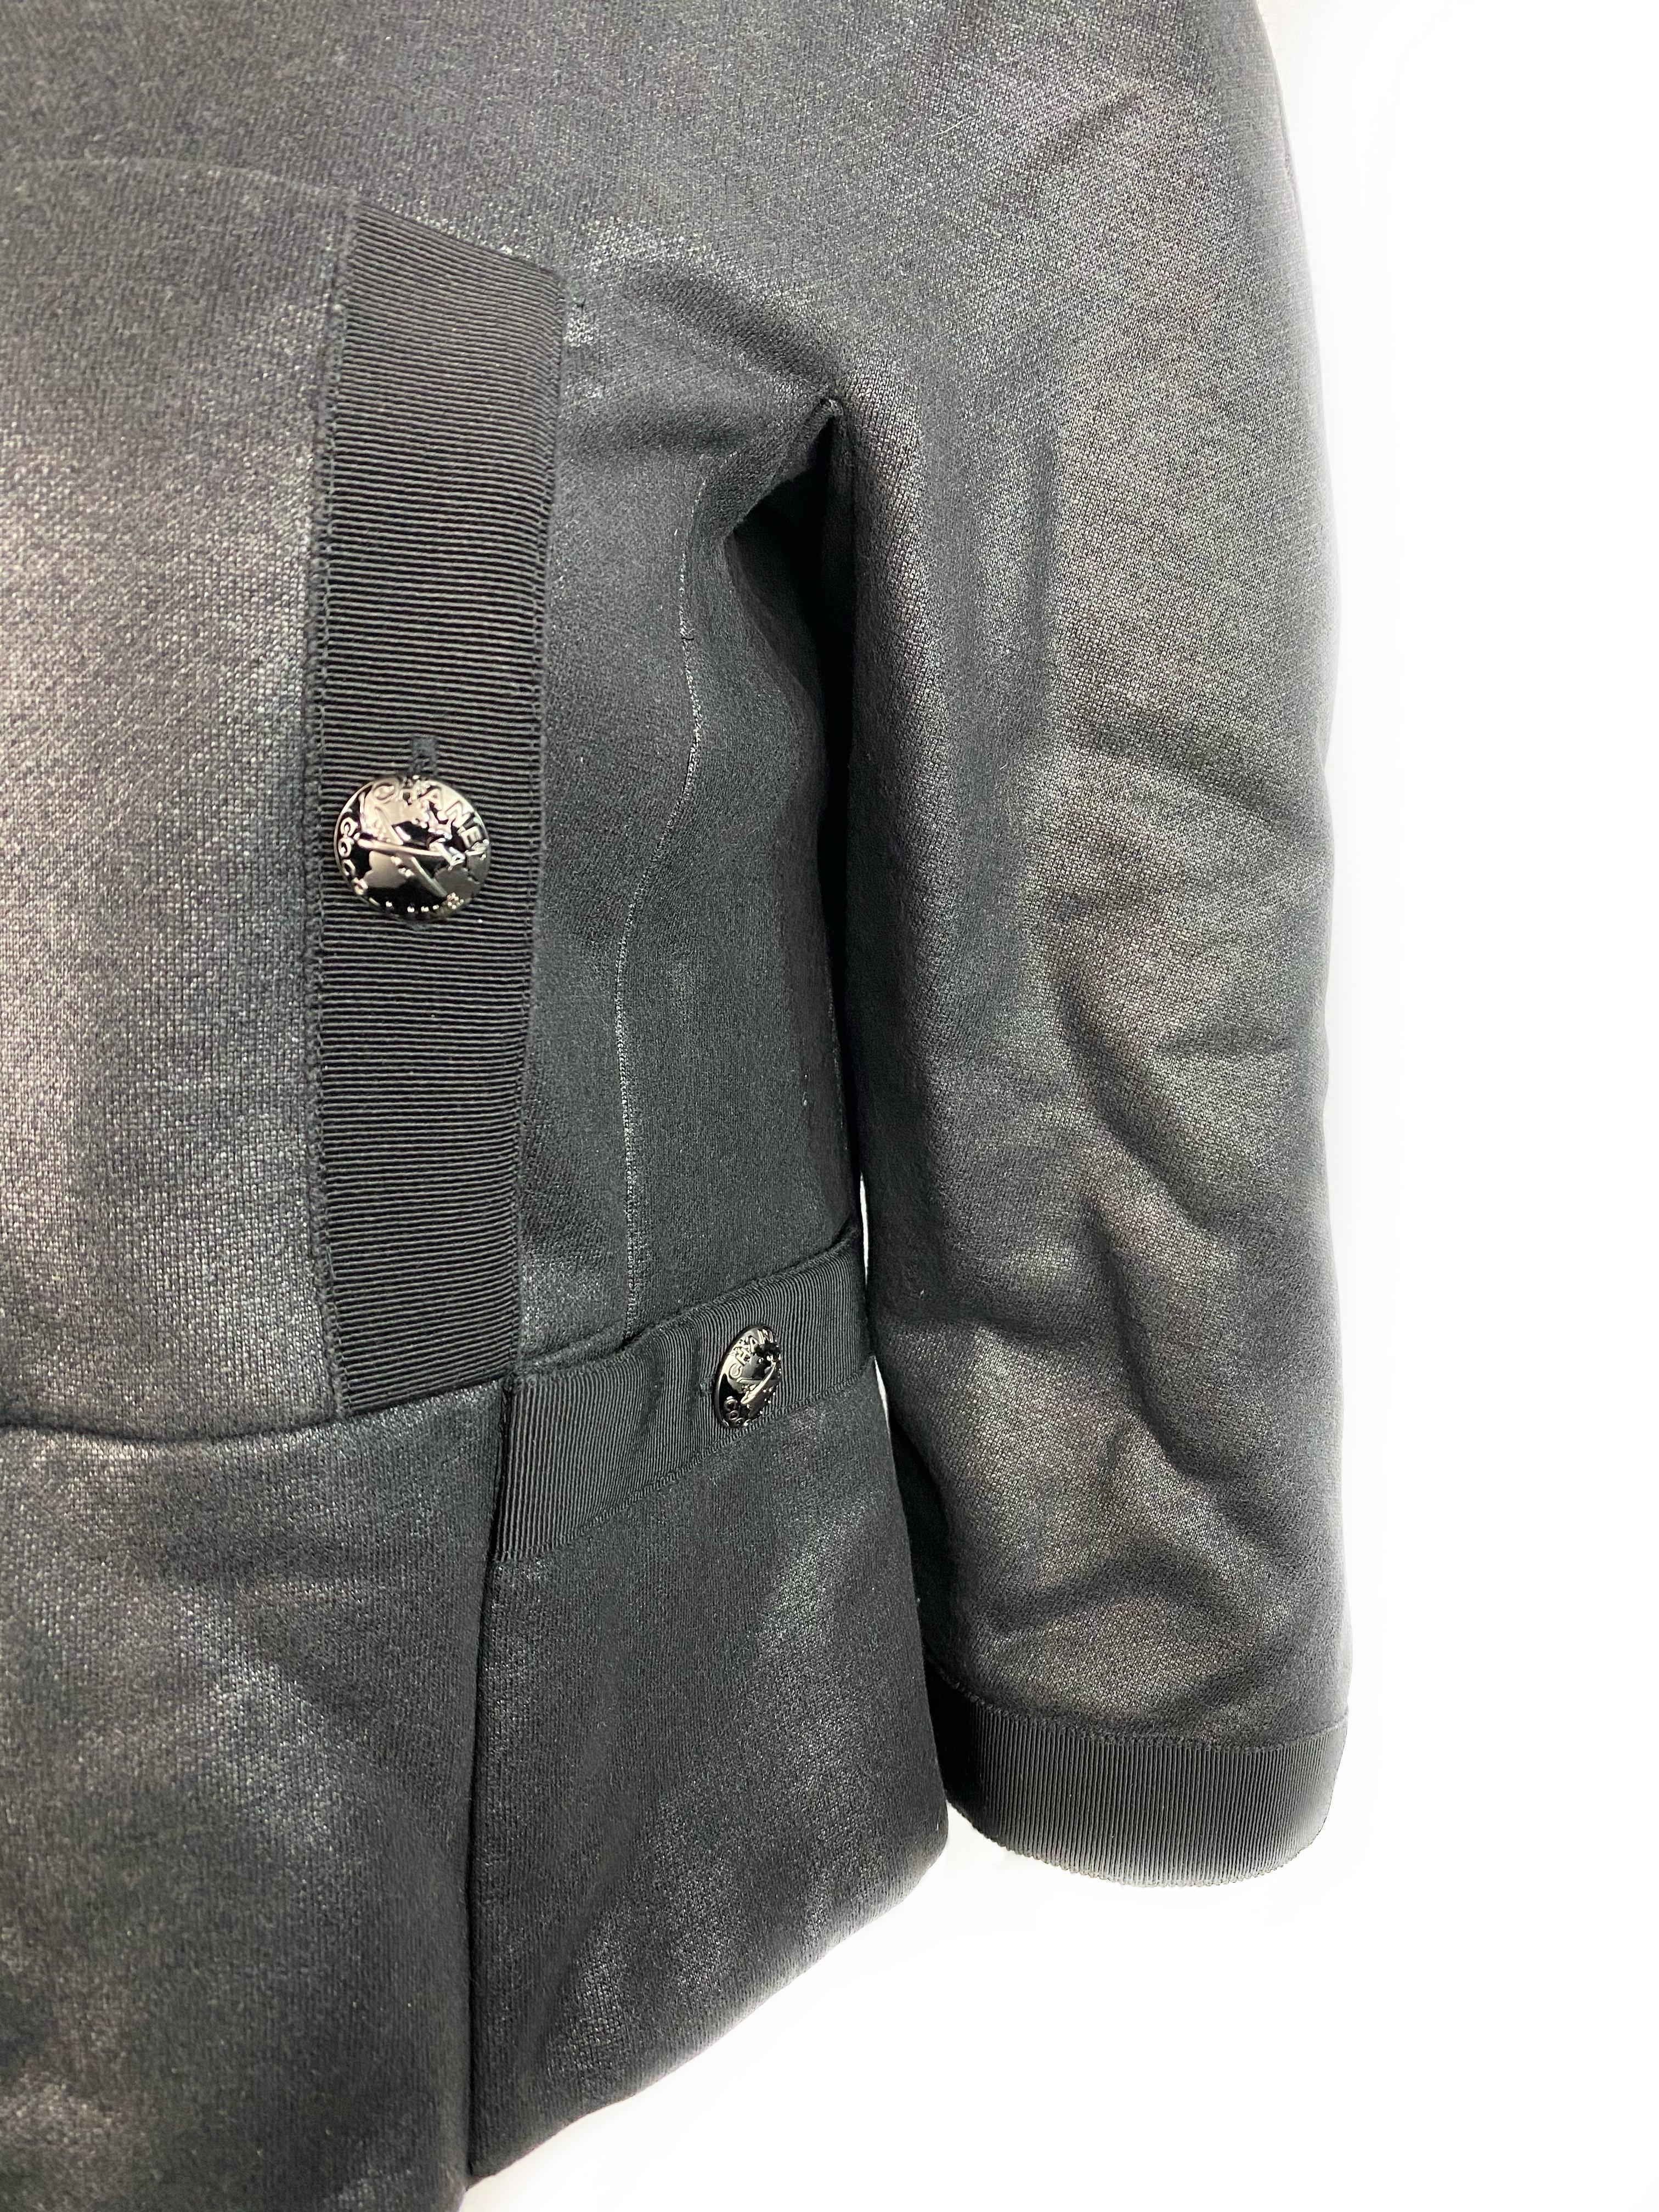 chanel denim jacket 2019